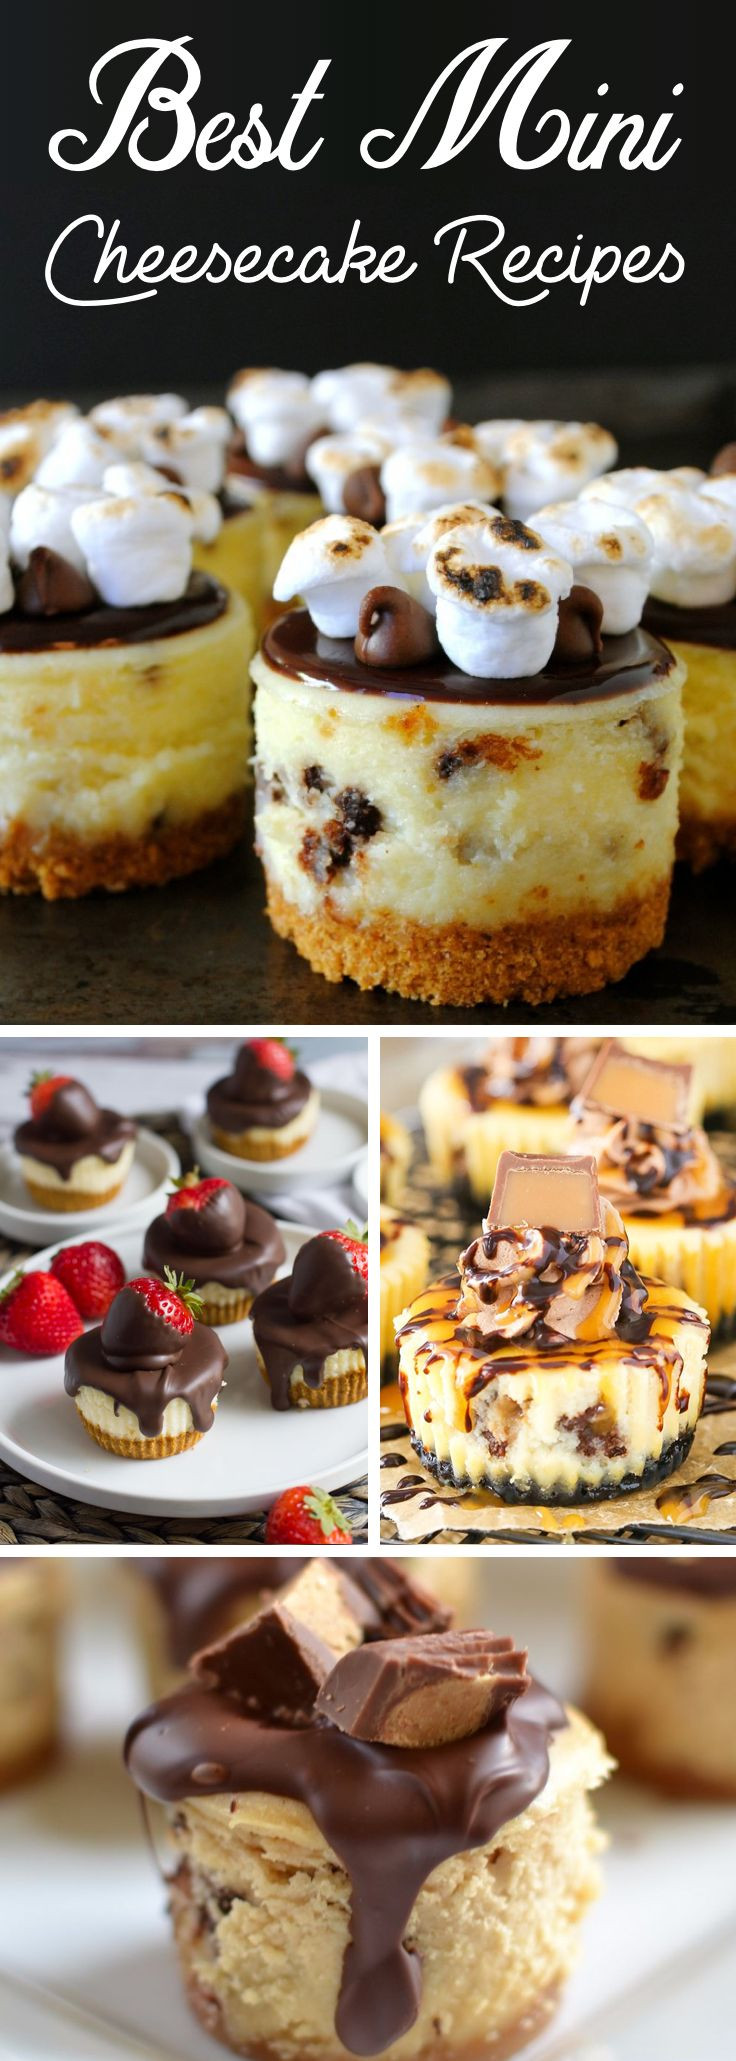 Individual Dessert Recipes
 The 25 best mini Desserts ideas on Pinterest